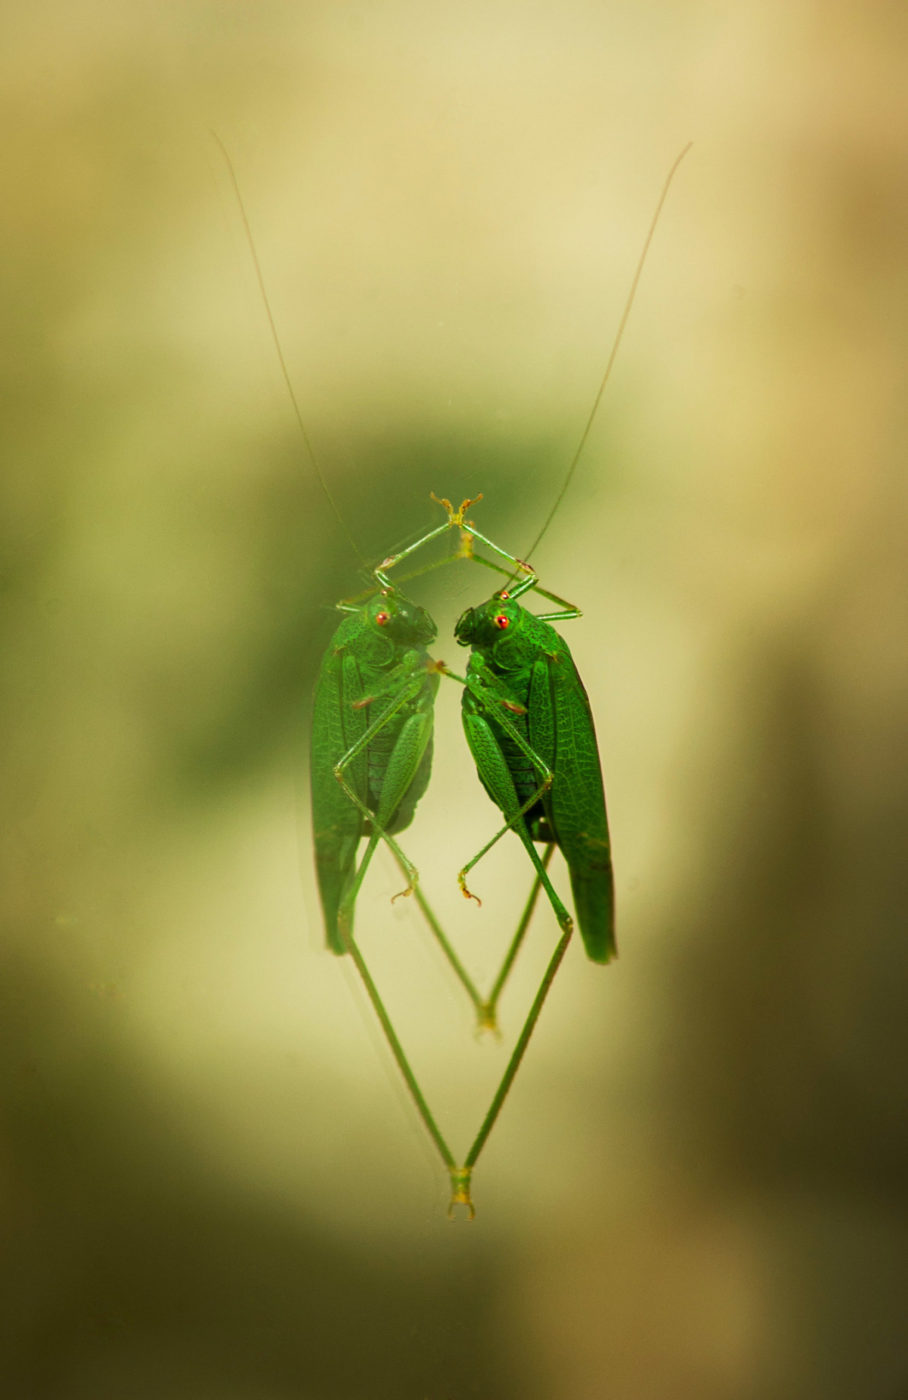 Green locust on a window